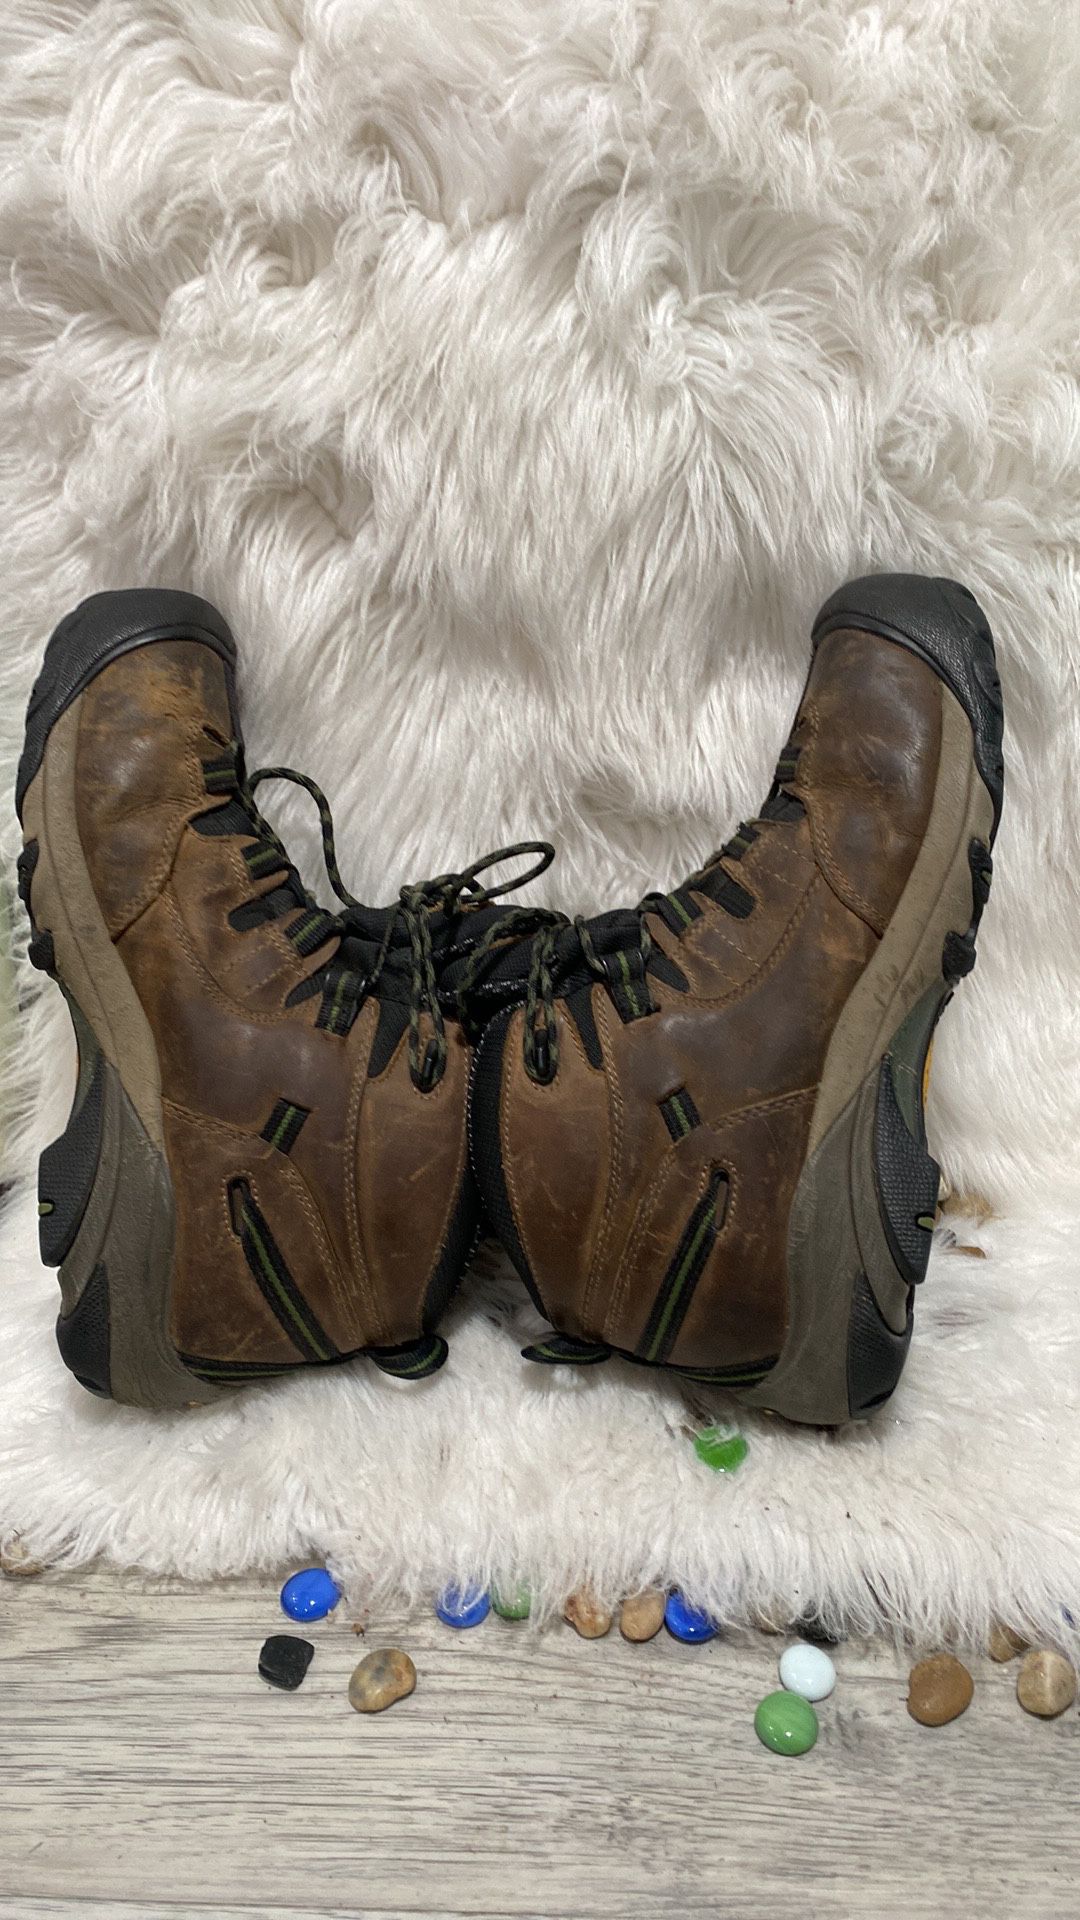 Mens KEEN Steel Toe Waterproof Work Boots Brown Leather F2413-11 Size 10